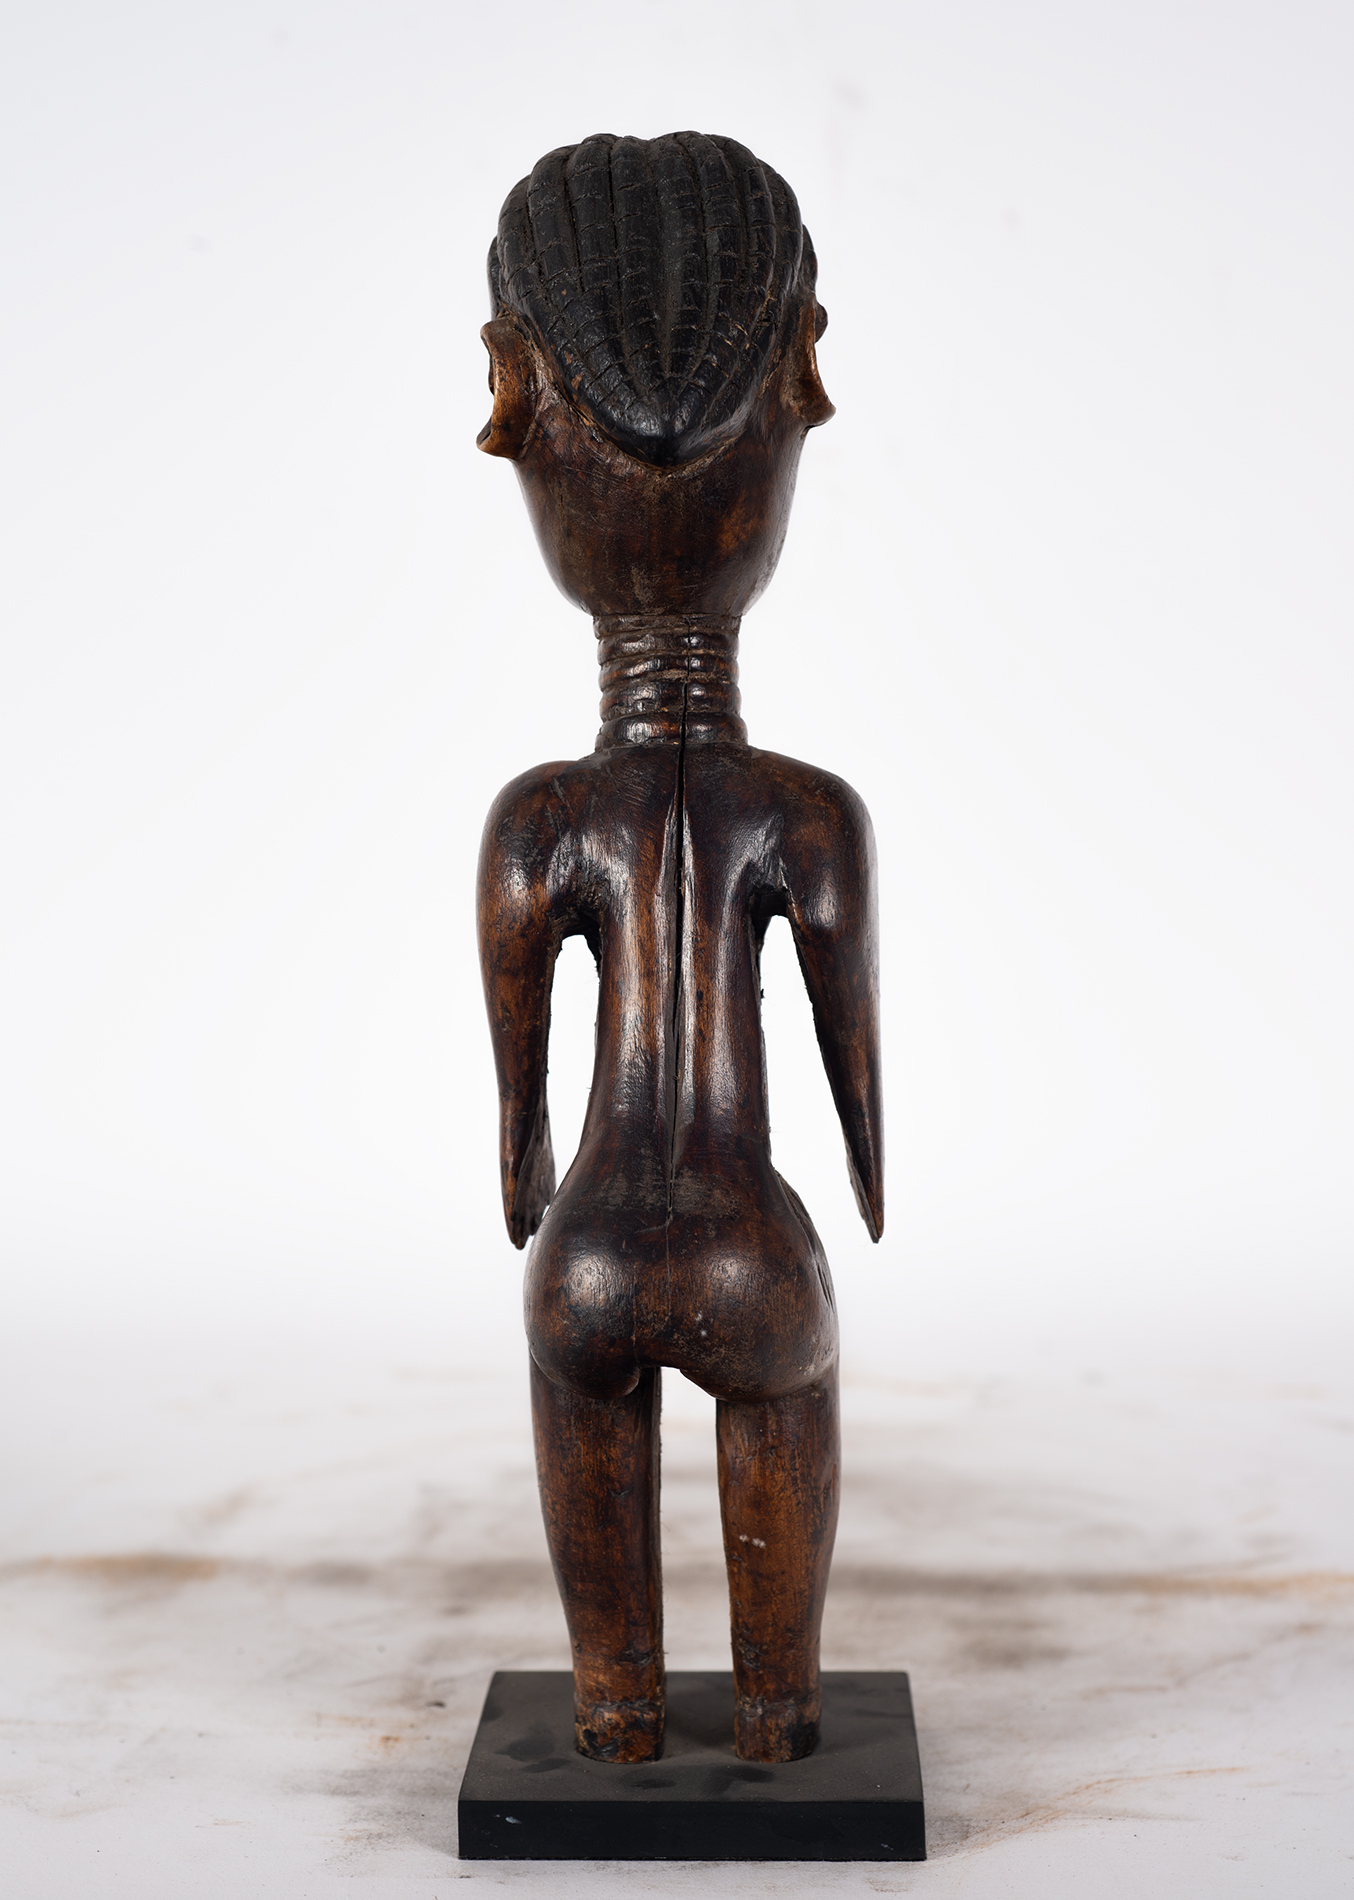 Guro Sculpture, Ivory Coast - Image 4 of 7